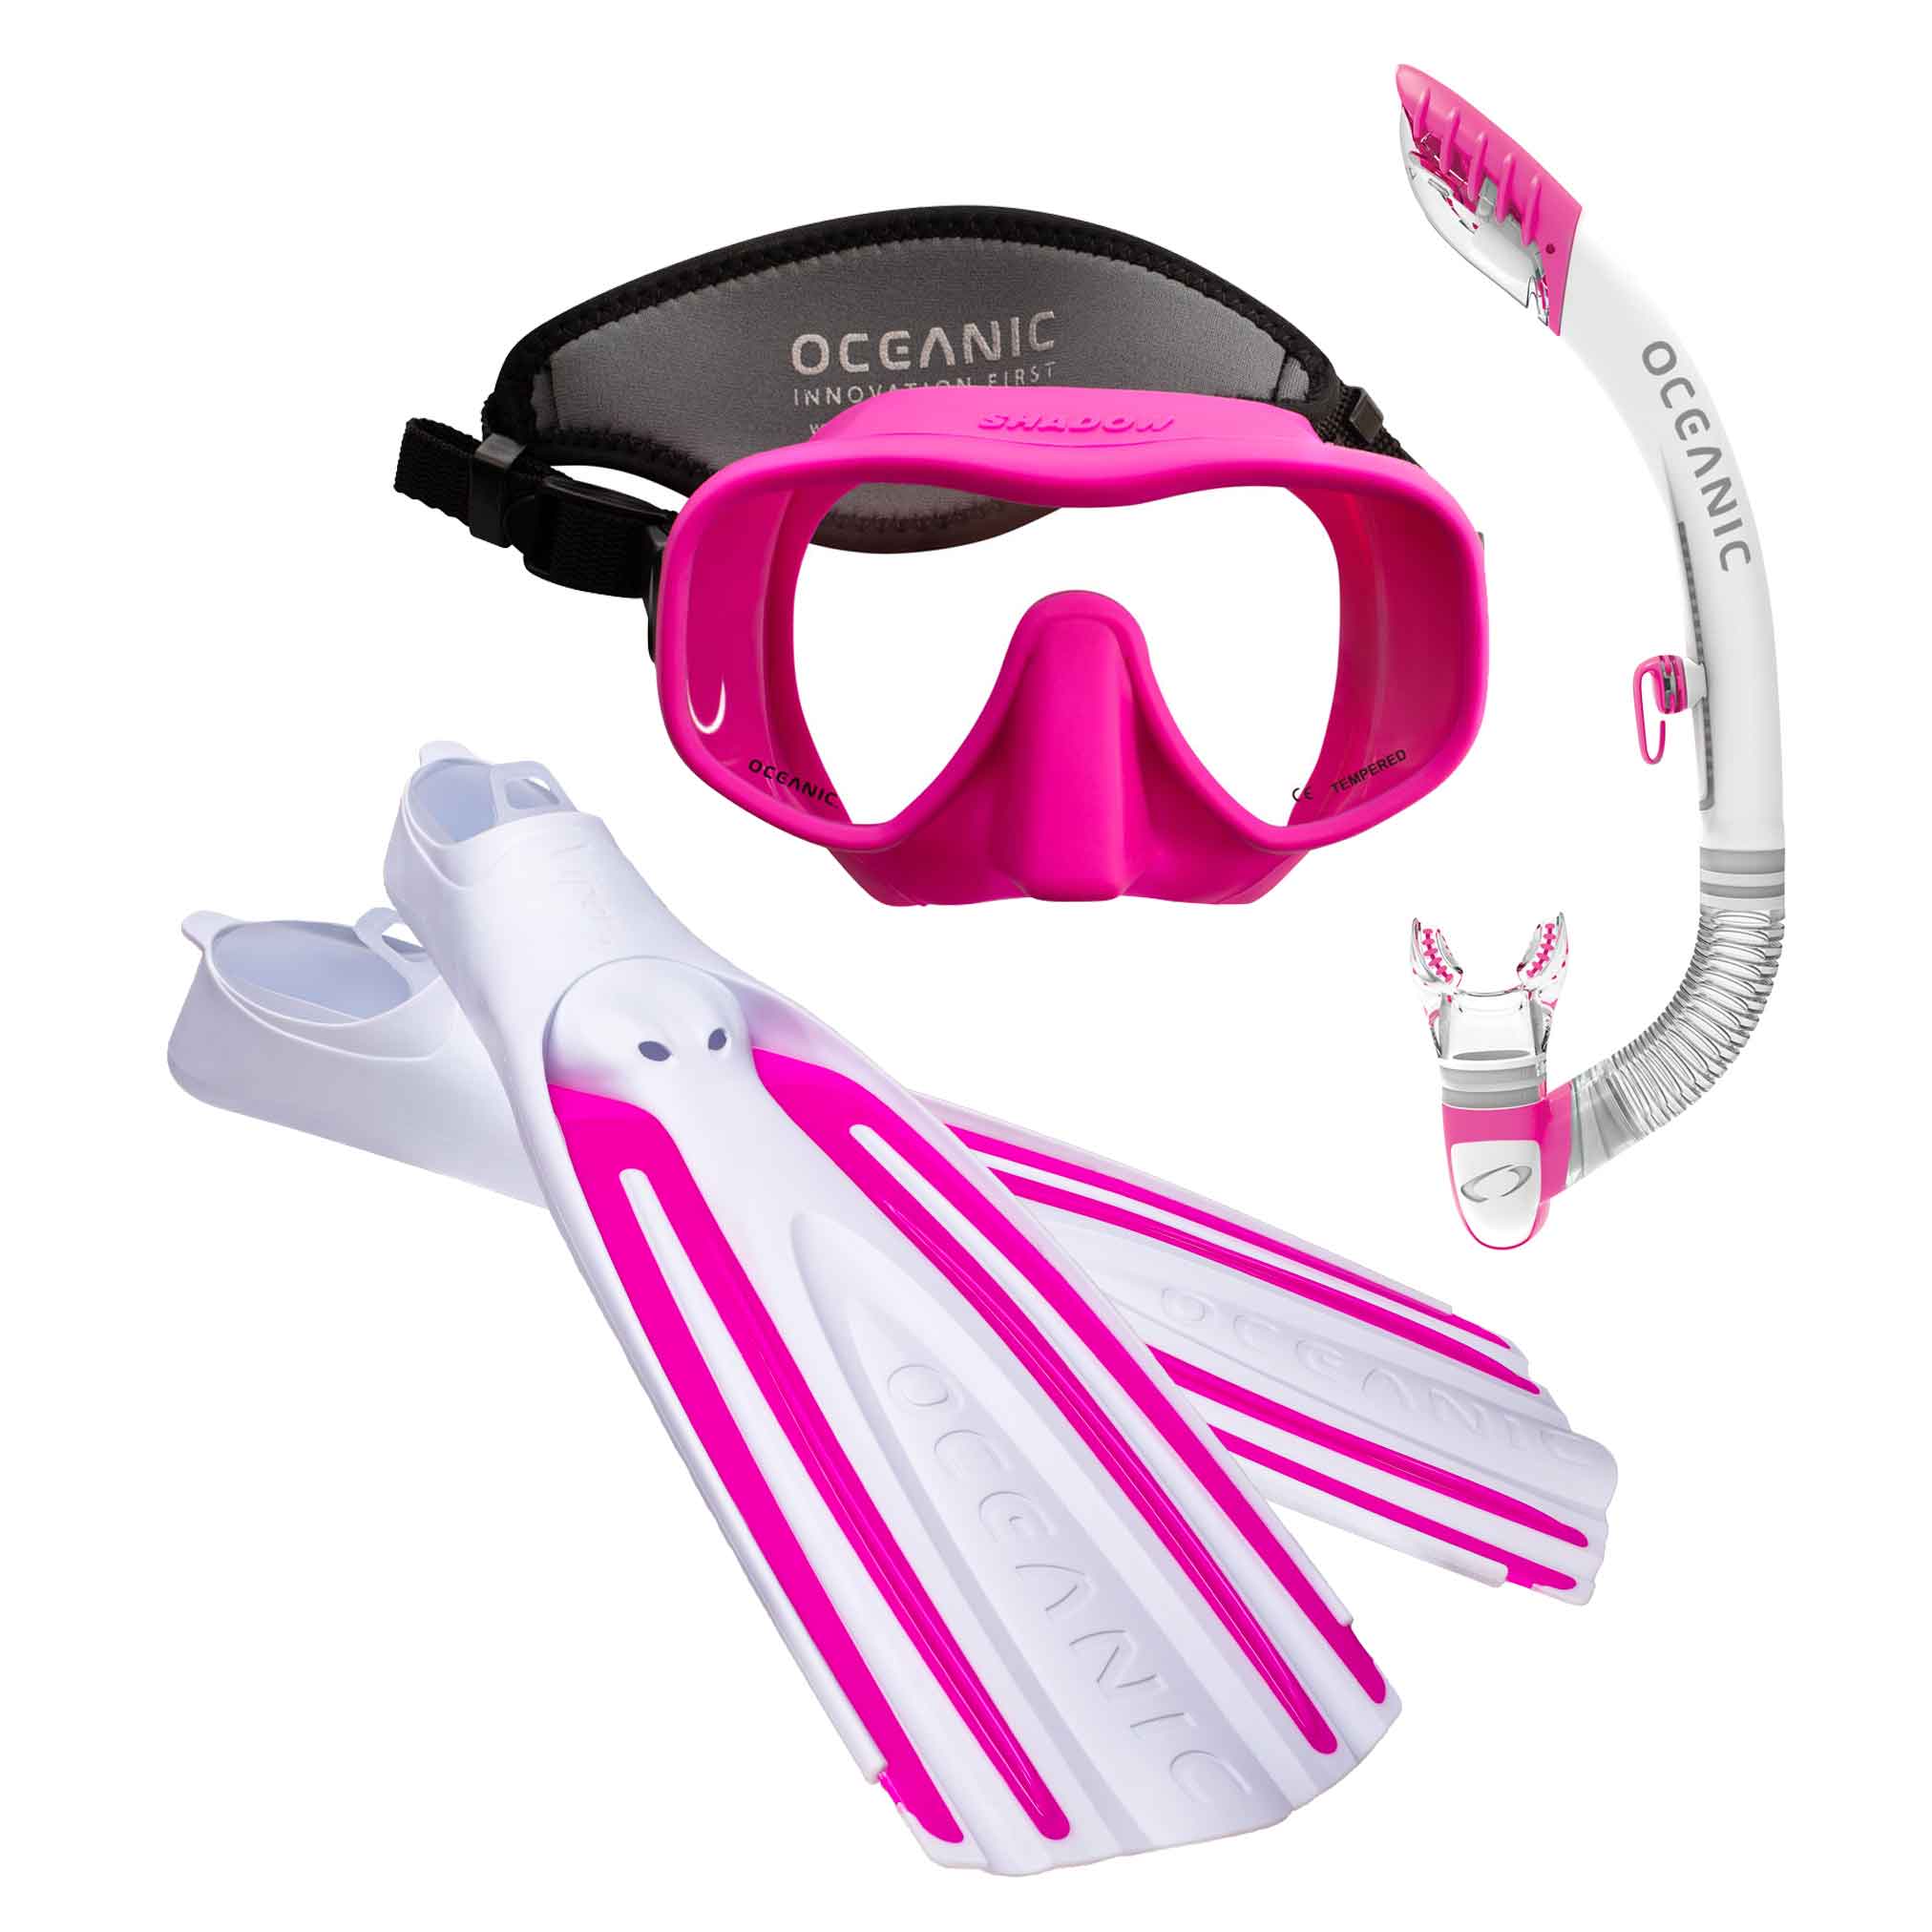 Oceanic Viper 2 Snorkel Set - Pink - Small Mask